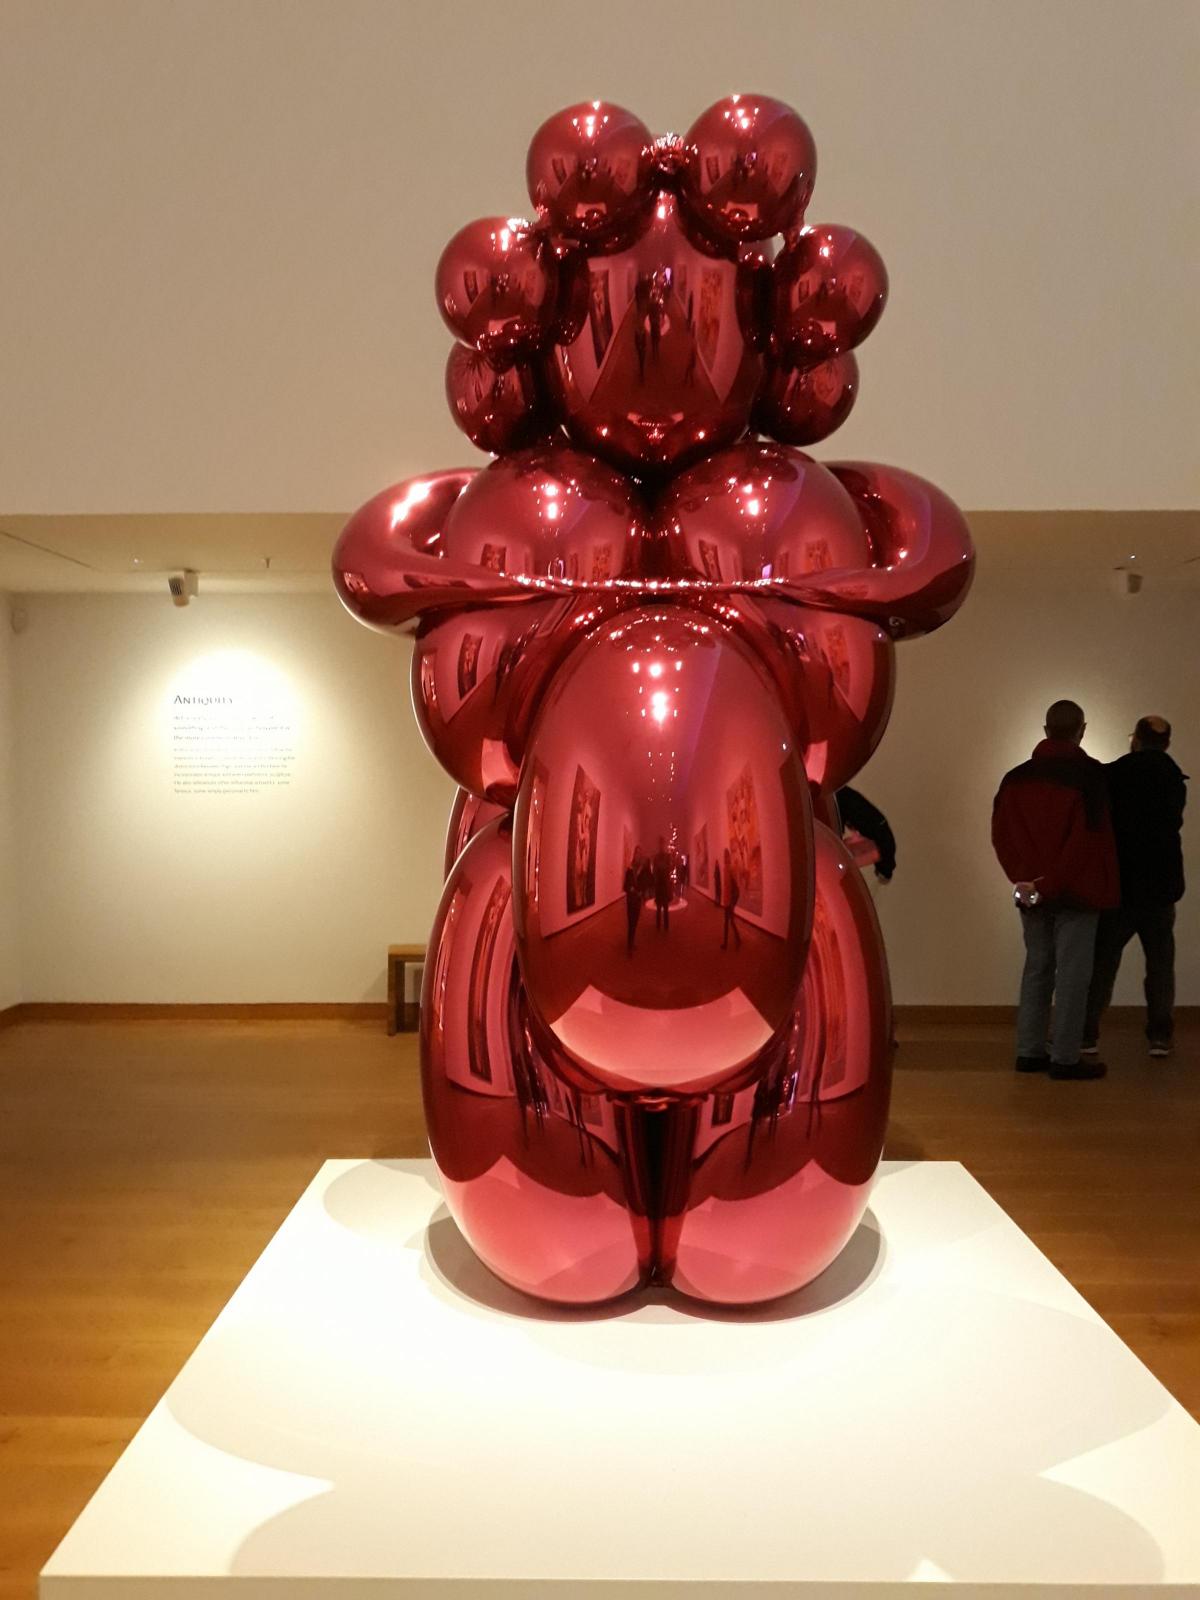 Jeff Koons art on display at Ashmolean Oxford - BBC News